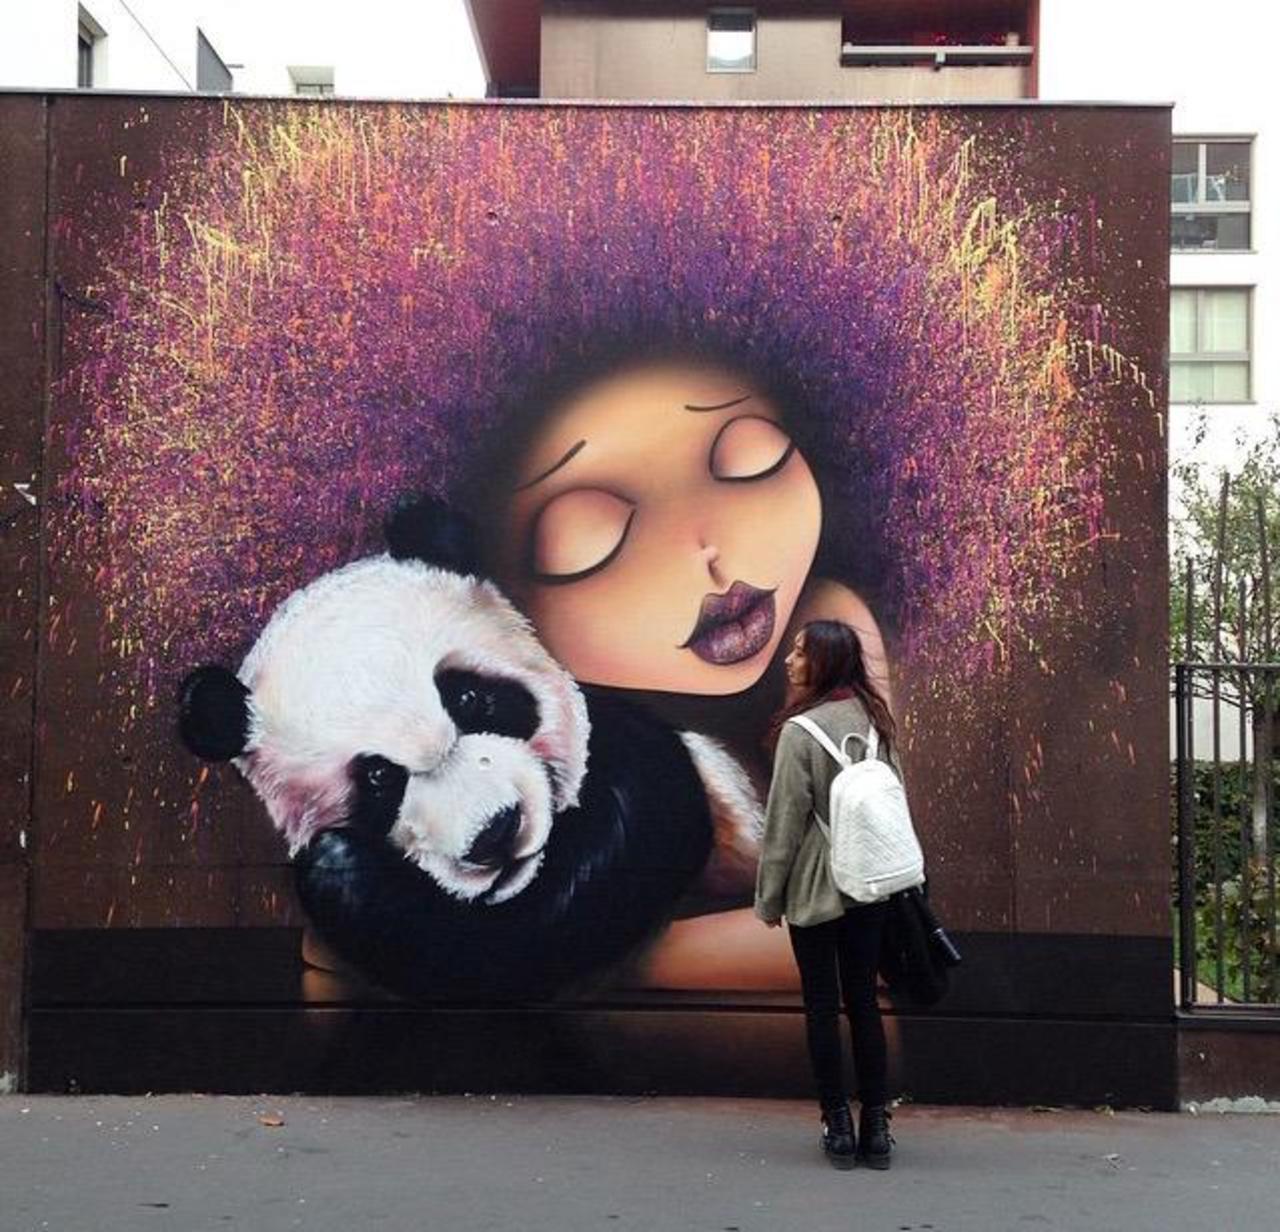 Street Art by VinieGraffiti in Paris 

#art #graffiti #mural #streetart http://t.co/OFCANMY0YQ